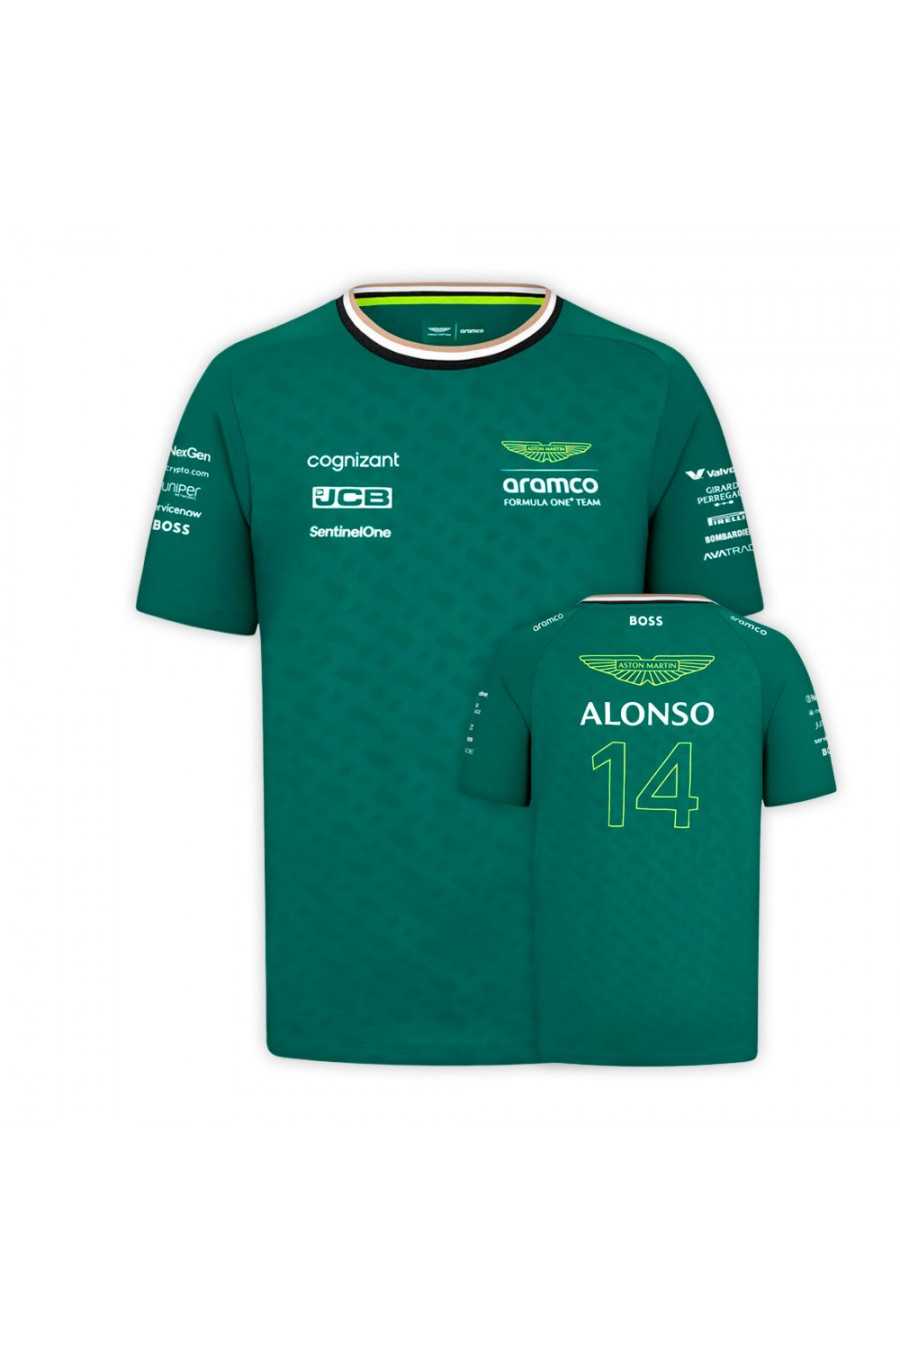 Camiseta Fernando Alonso Aston Martin F1 